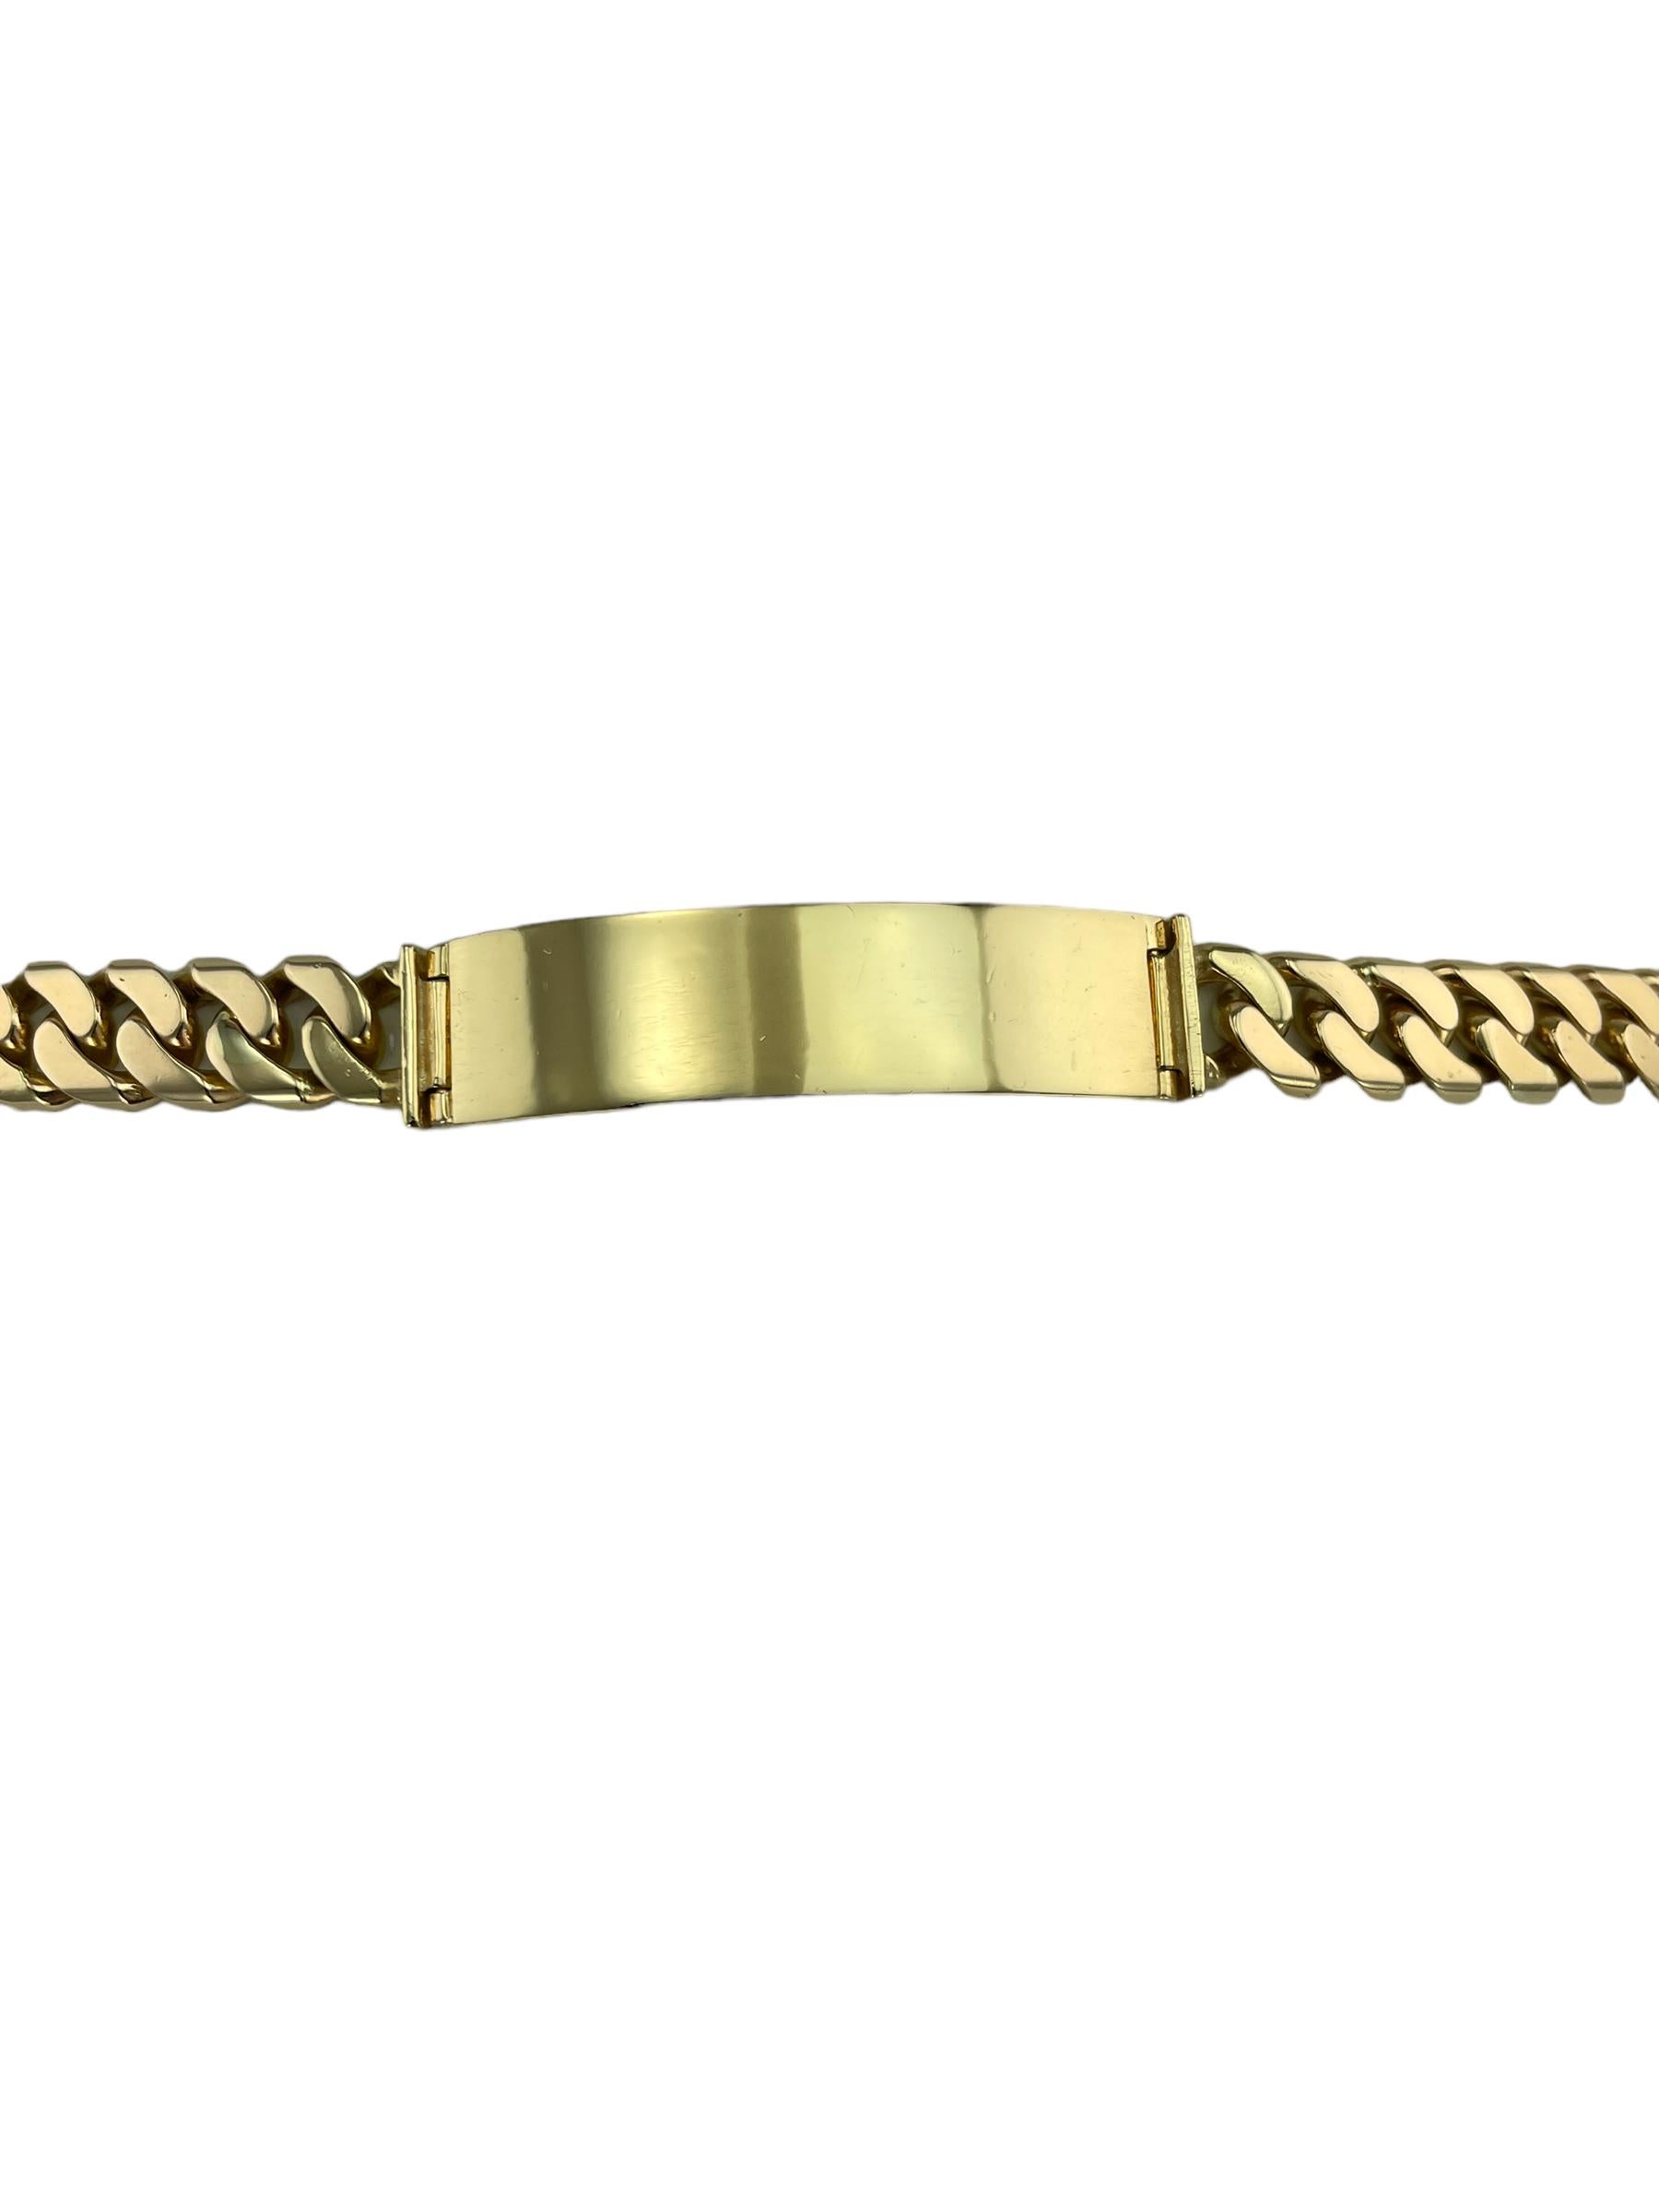 Women's or Men's Curb Link Yellow Gold ID Bracelet 